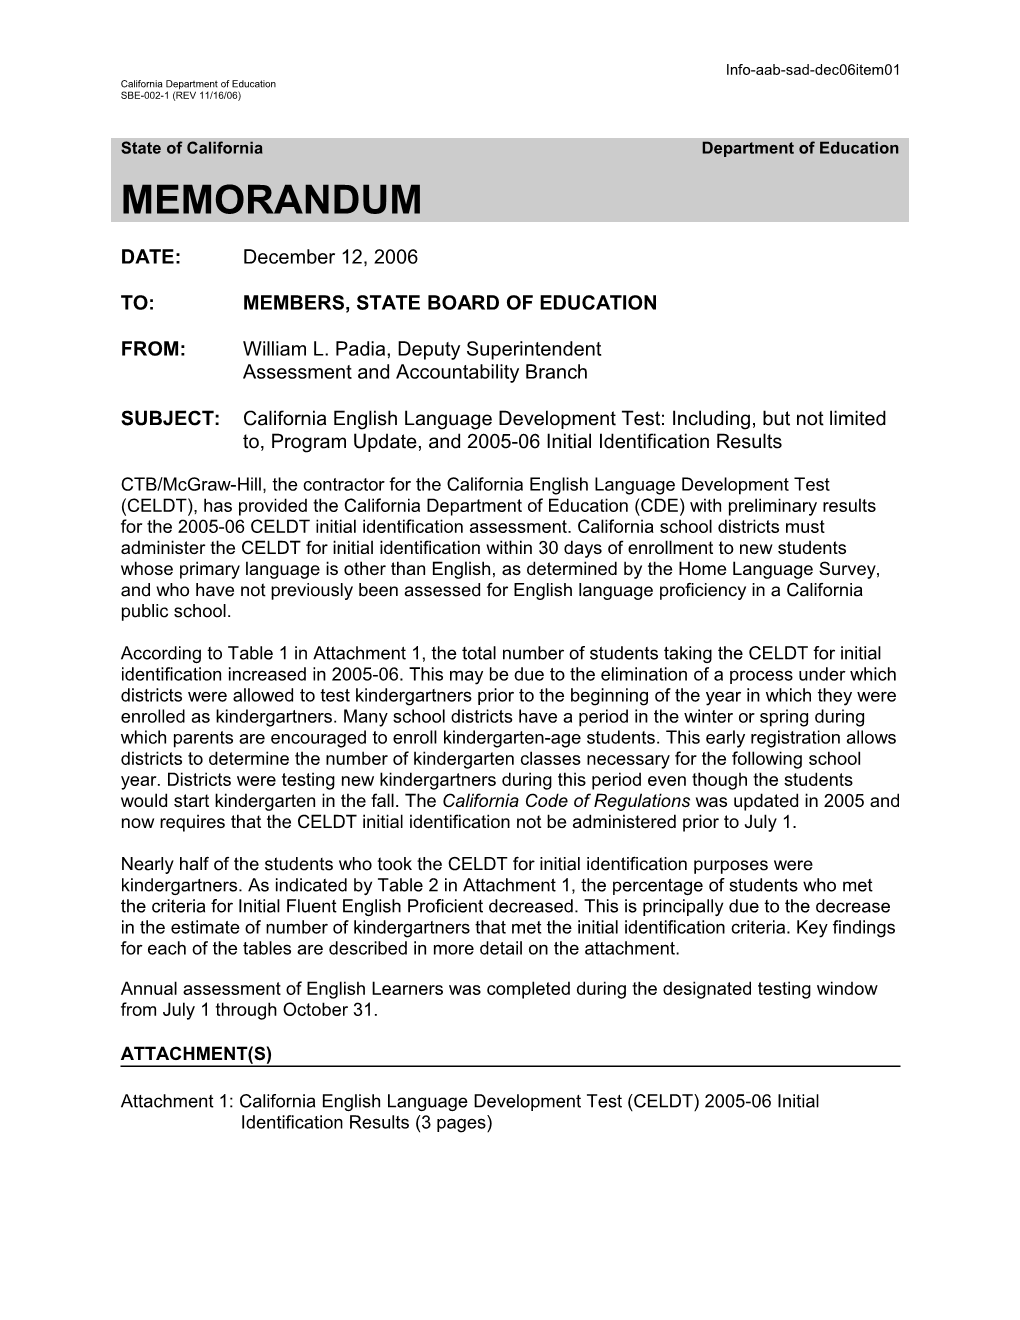 January 2007 SAD Item 01 - Information Memorandum (CA State Board of Education)